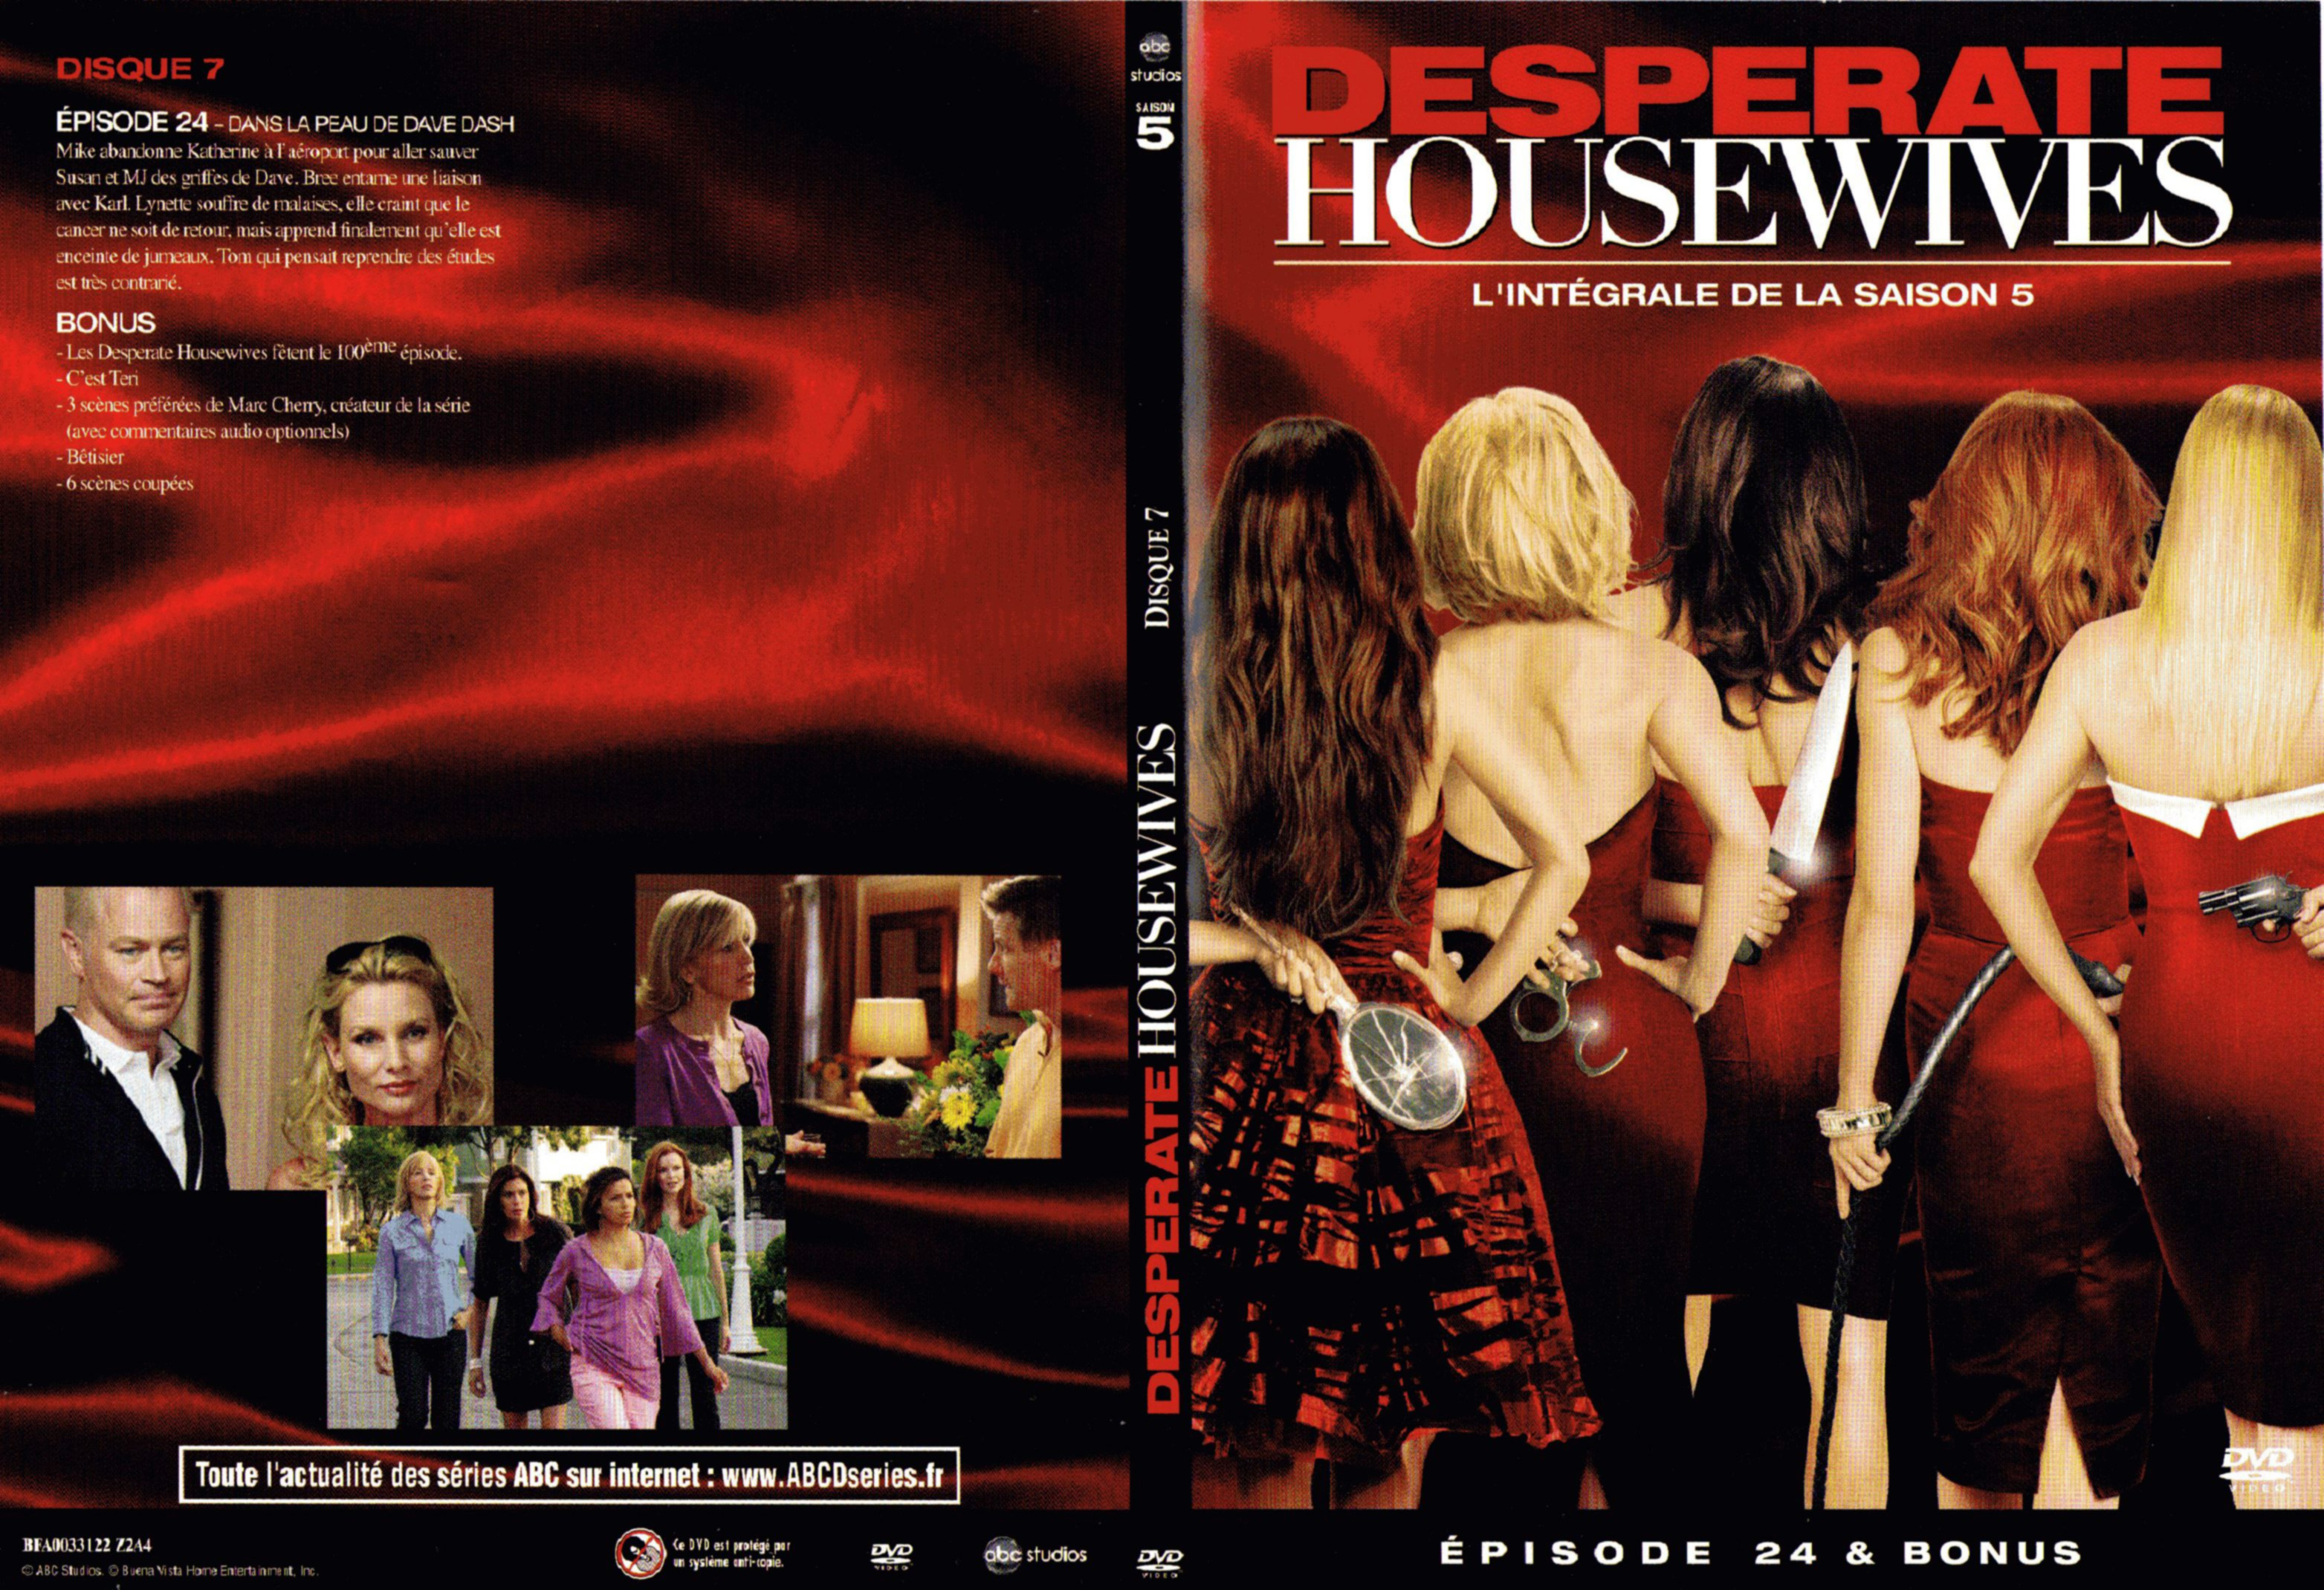 Jaquette DVD Desperate housewives Saison 5 DVD 4